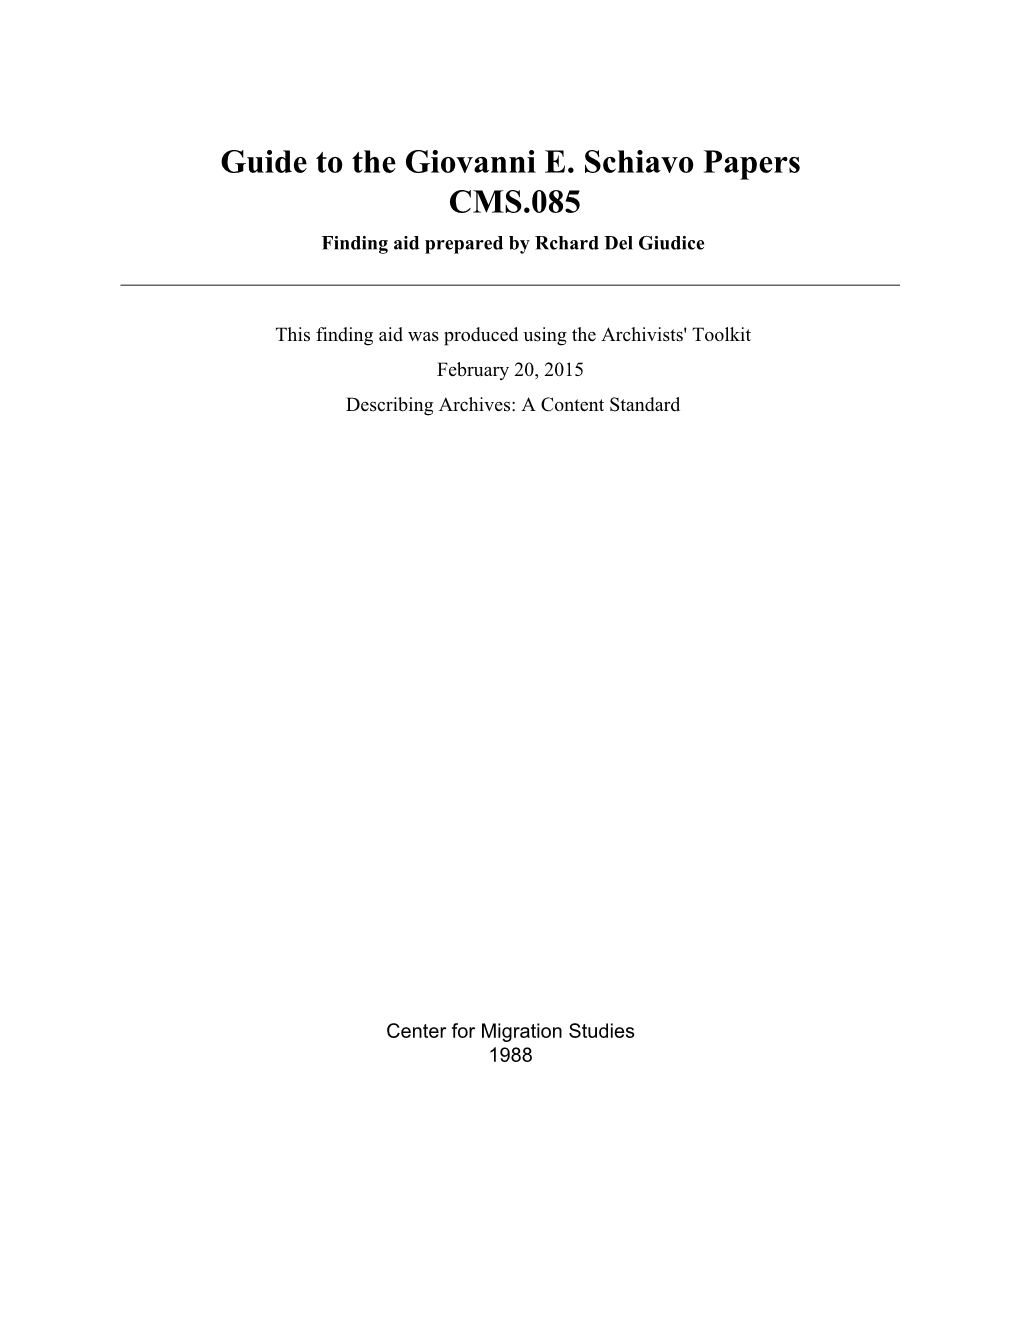 Guide to the Giovanni E. Schiavo Papers CMS.085 Finding Aid Prepared by Rchard Del Giudice